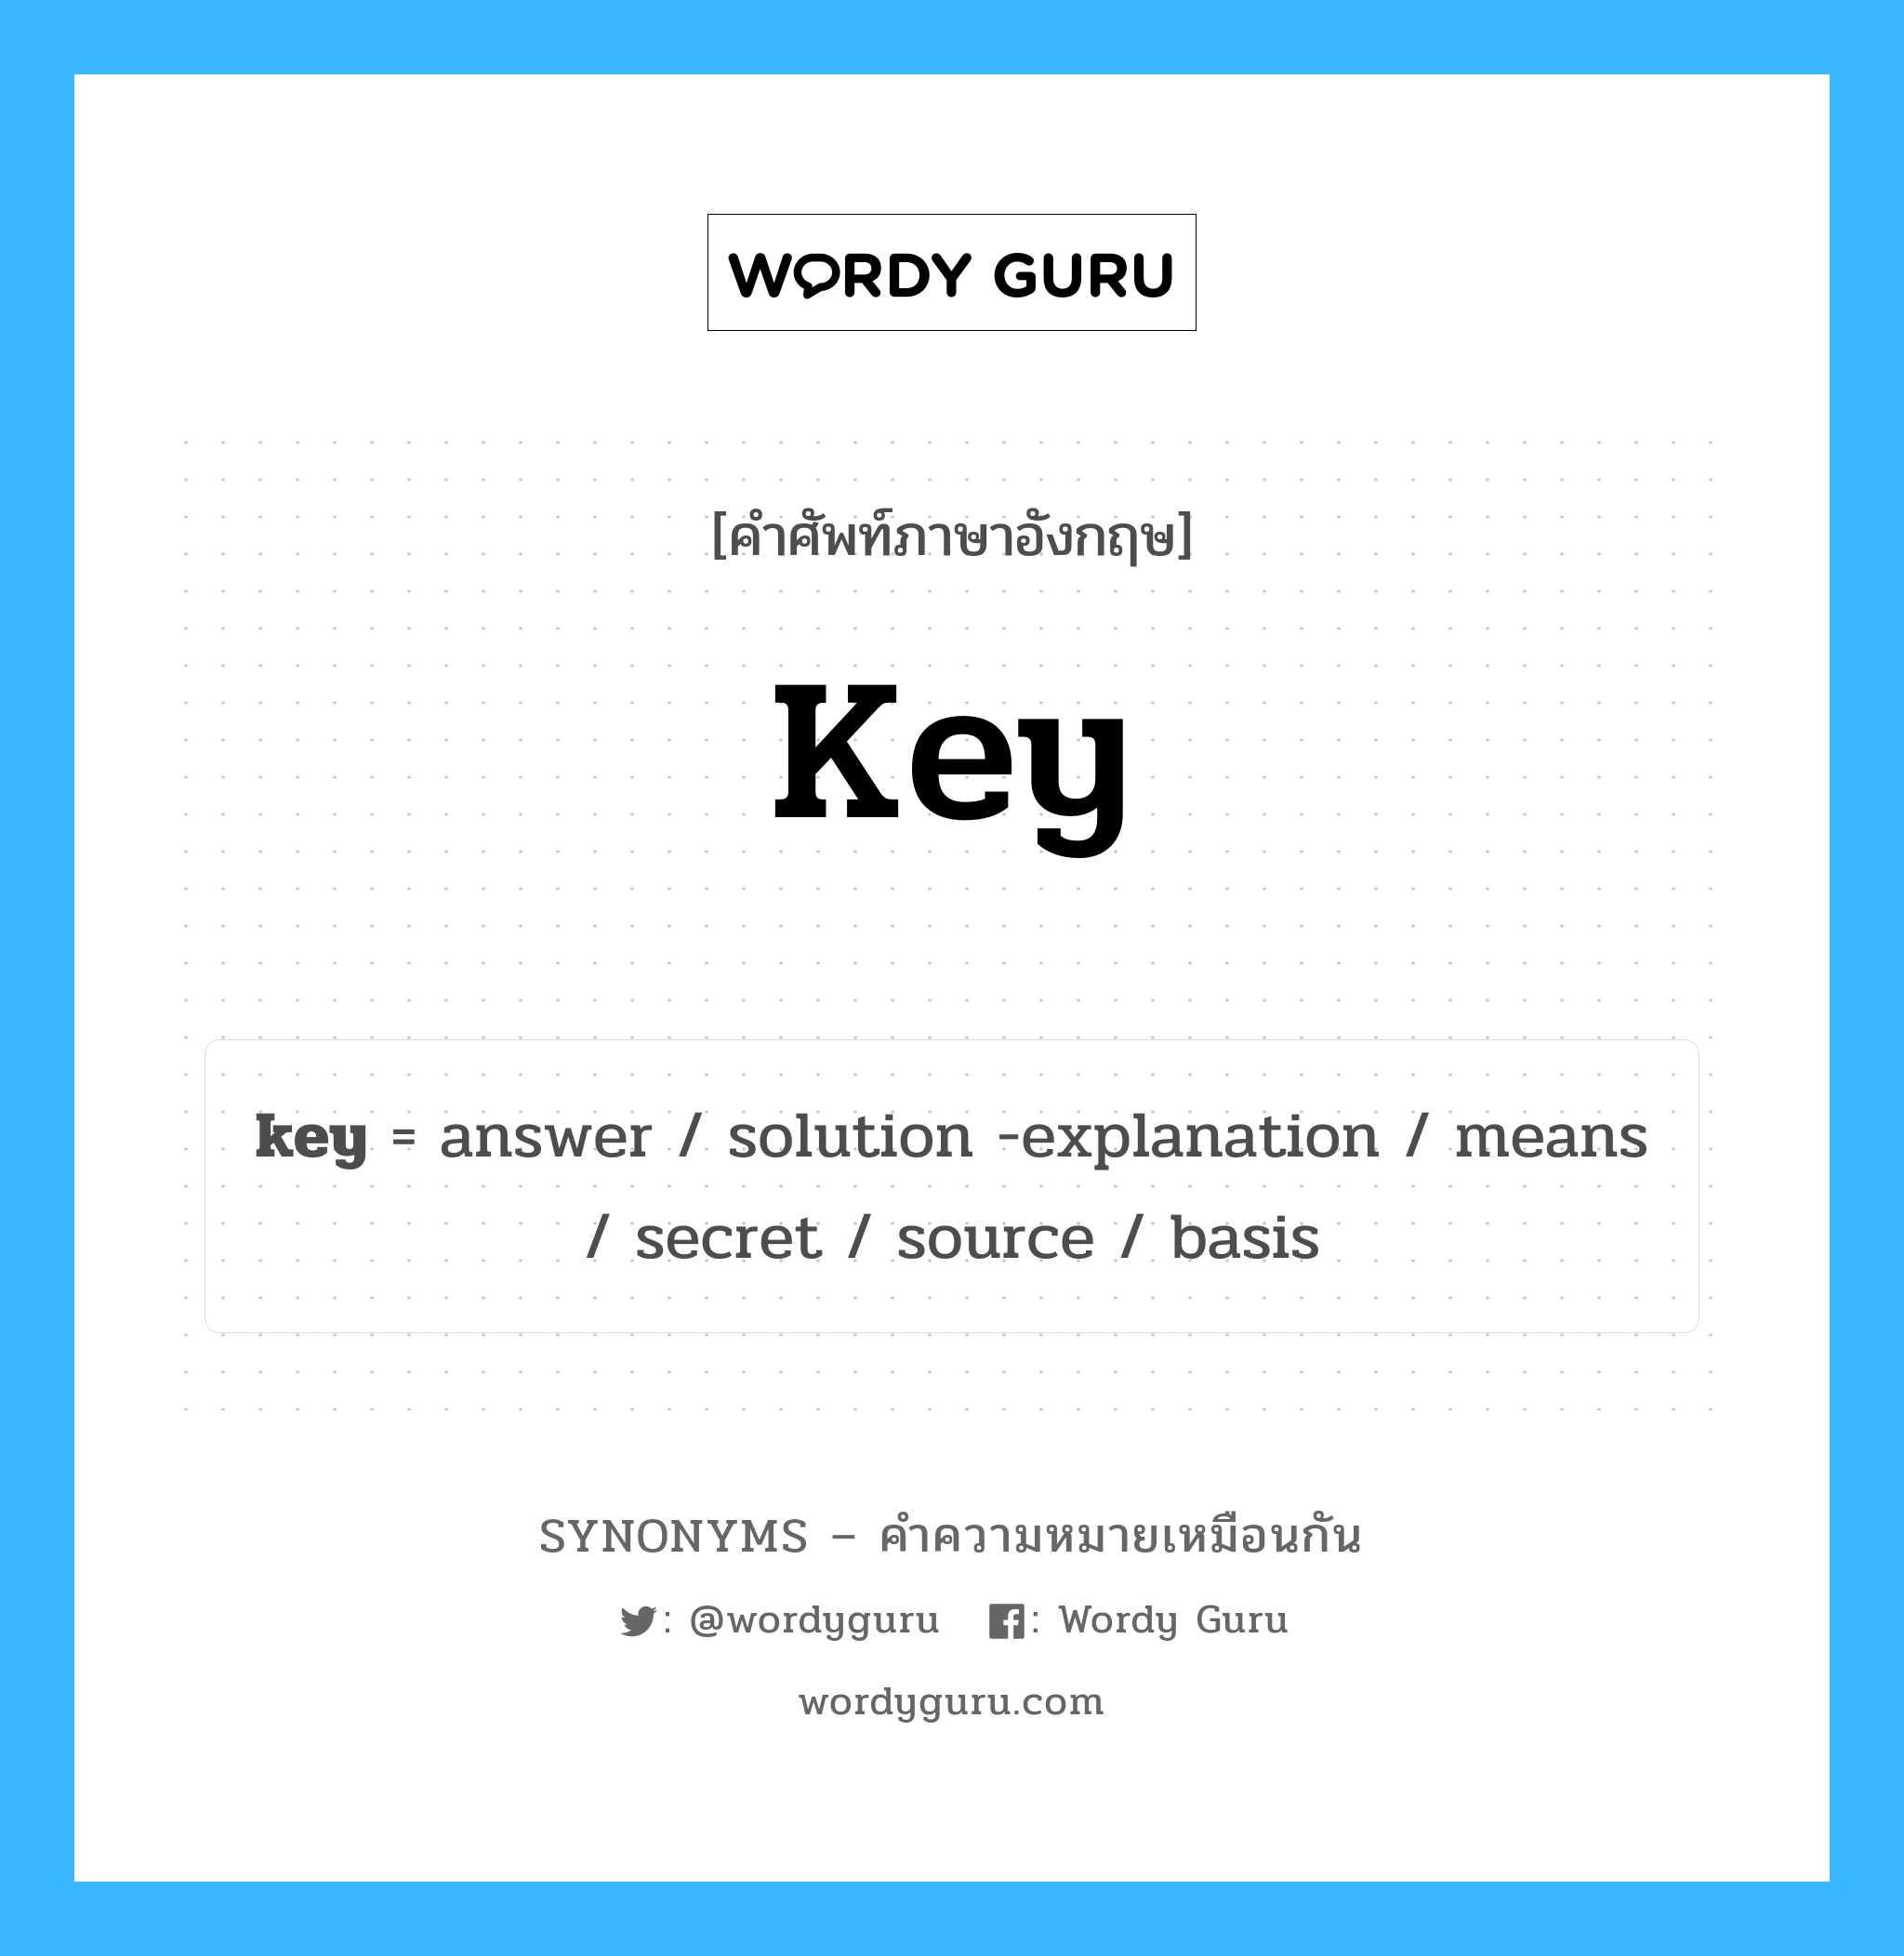 answer เป็นหนึ่งใน key และมีคำอื่น ๆ อีกดังนี้, คำศัพท์ภาษาอังกฤษ answer ความหมายคล้ายกันกับ key แปลว่า คำตอบ หมวด key